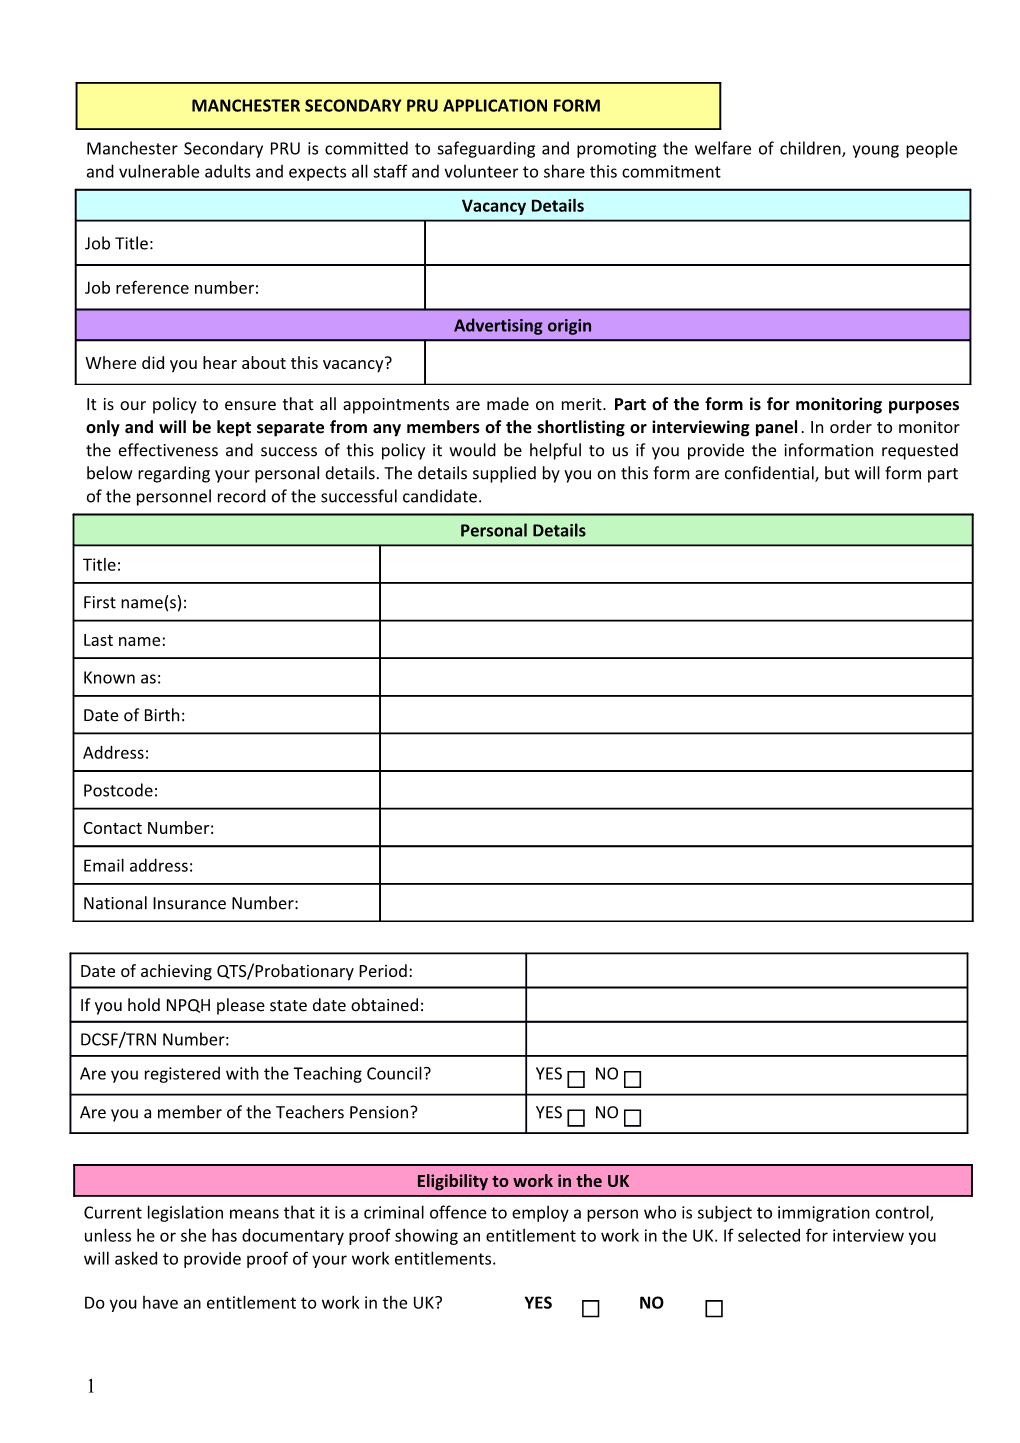 Manchester Secondary Pru Application Form